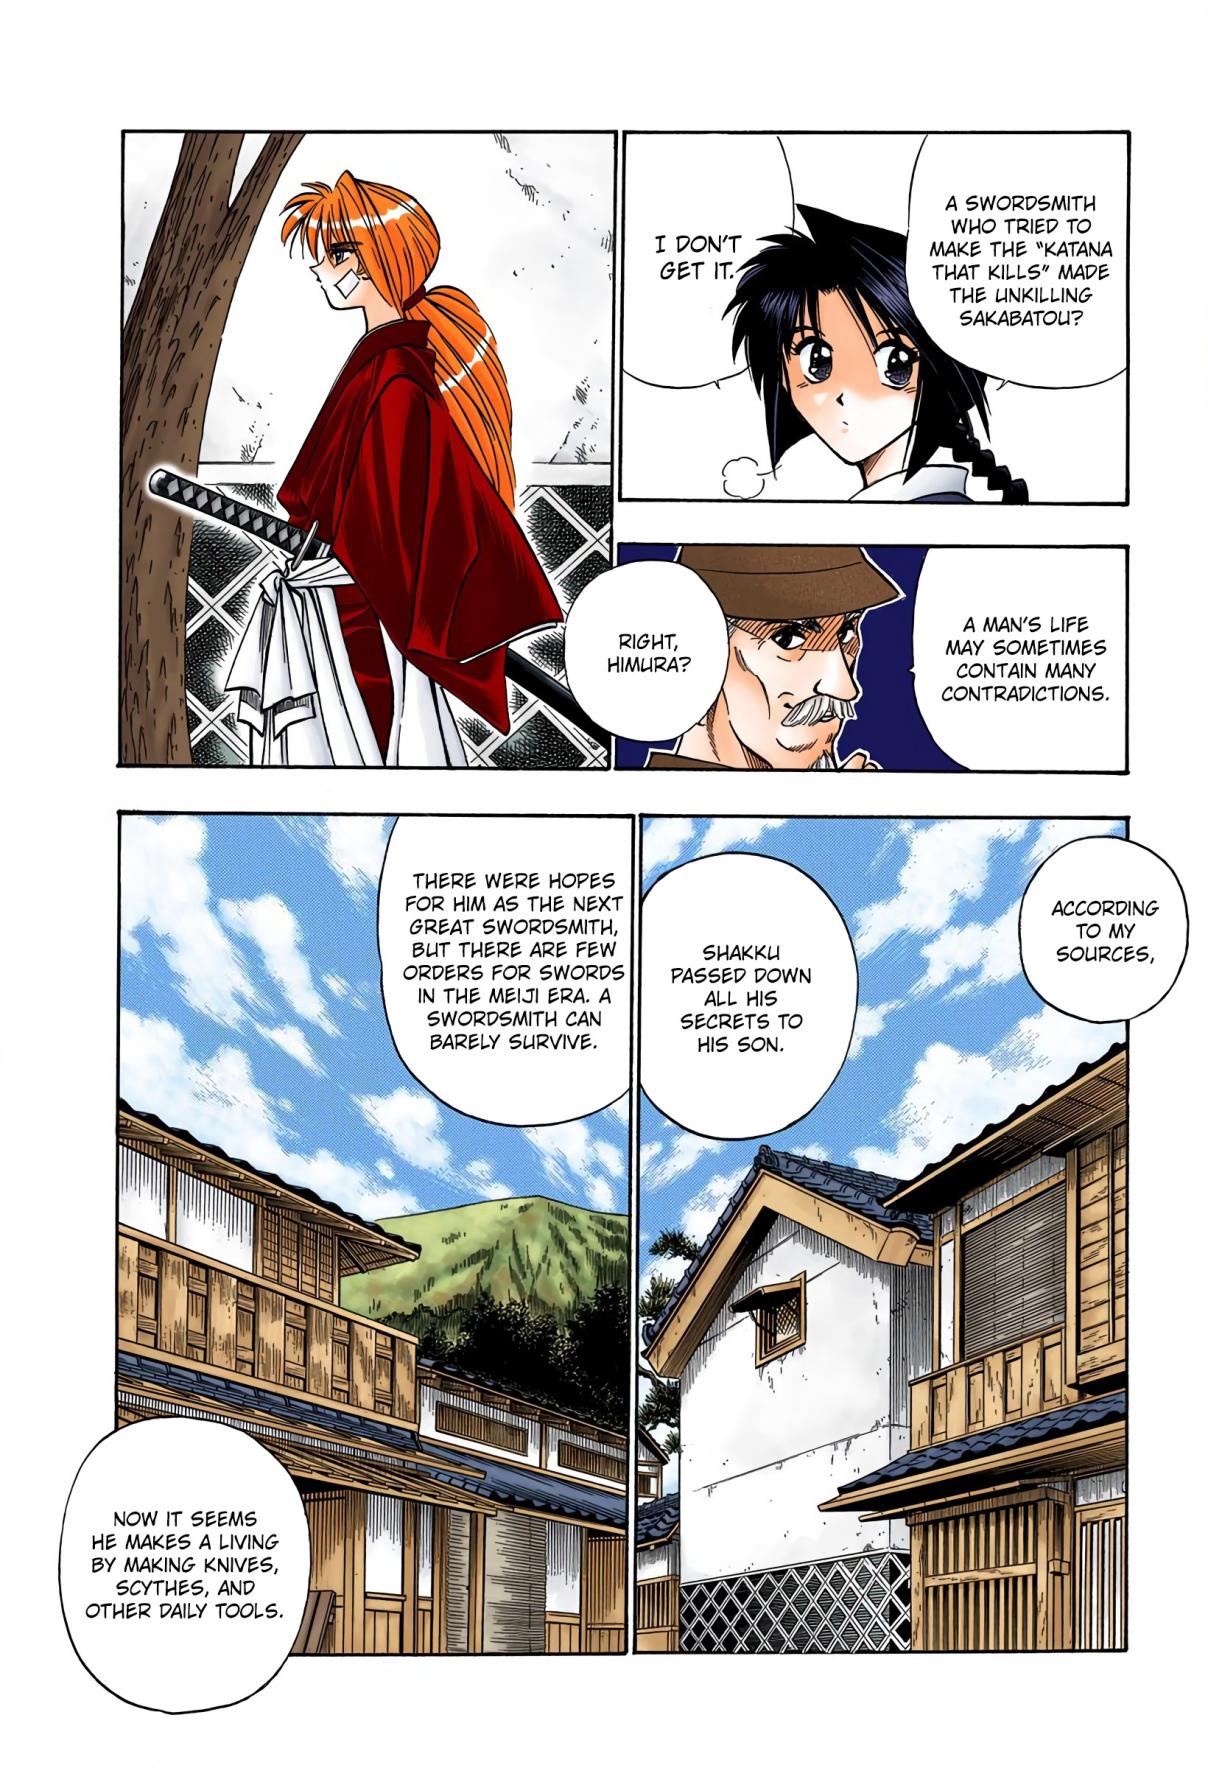 Rurouni Kenshin Digital Colored Comics Vol. 9 Ch. 75 Search for a Sakabatou